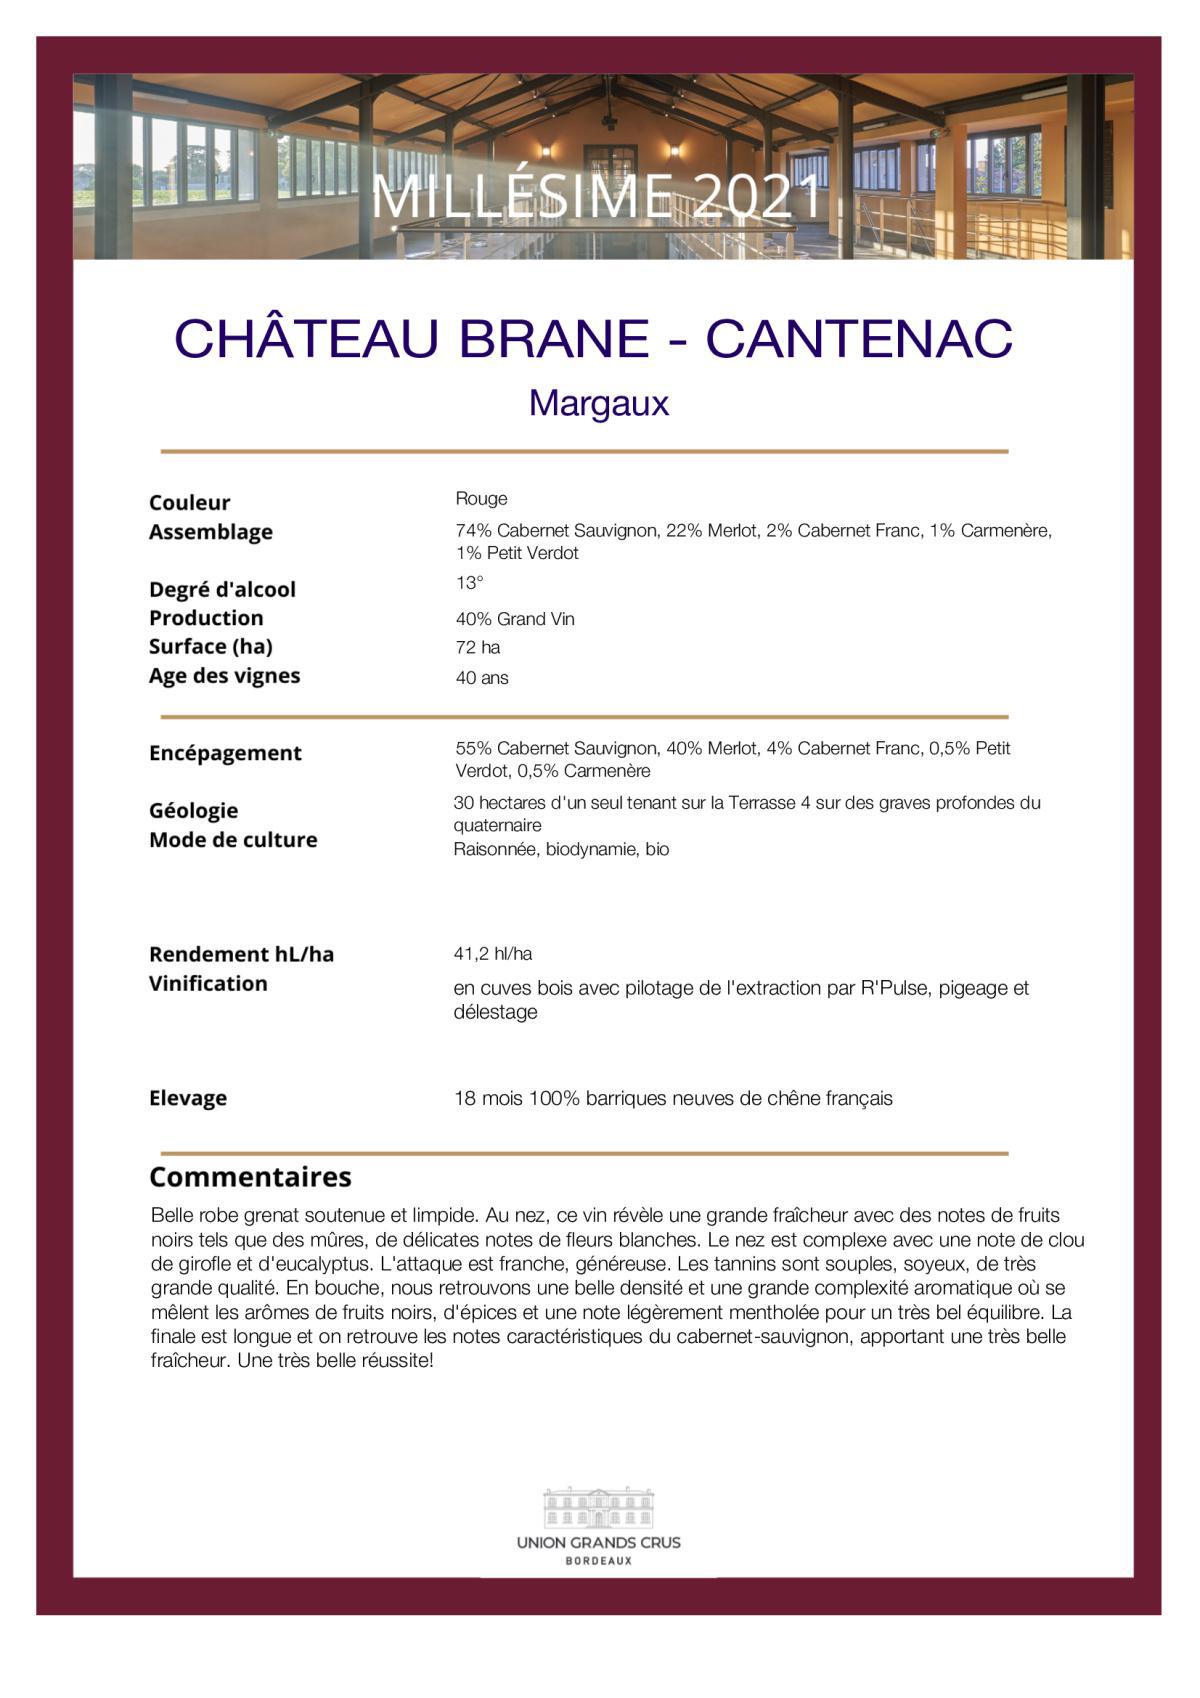 Château Brane - Cantenac